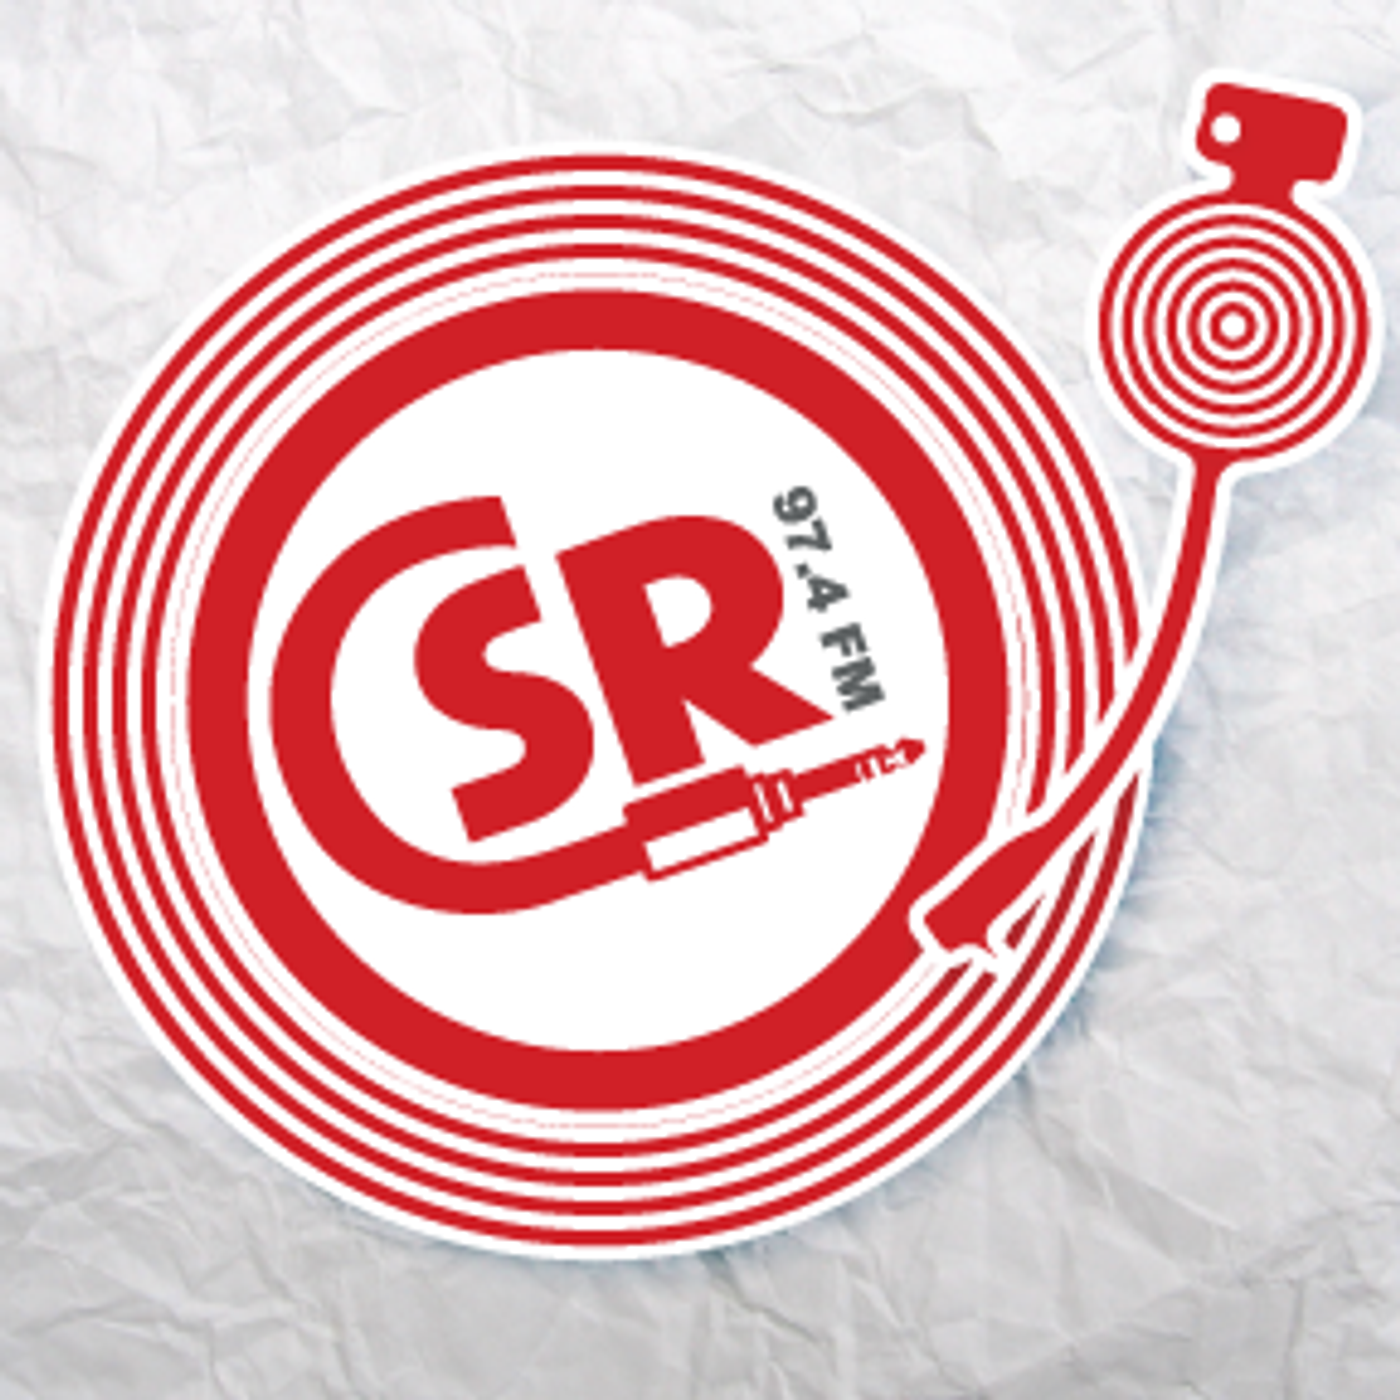 CSRfm - Canterbury's local Community & Student Radio Station